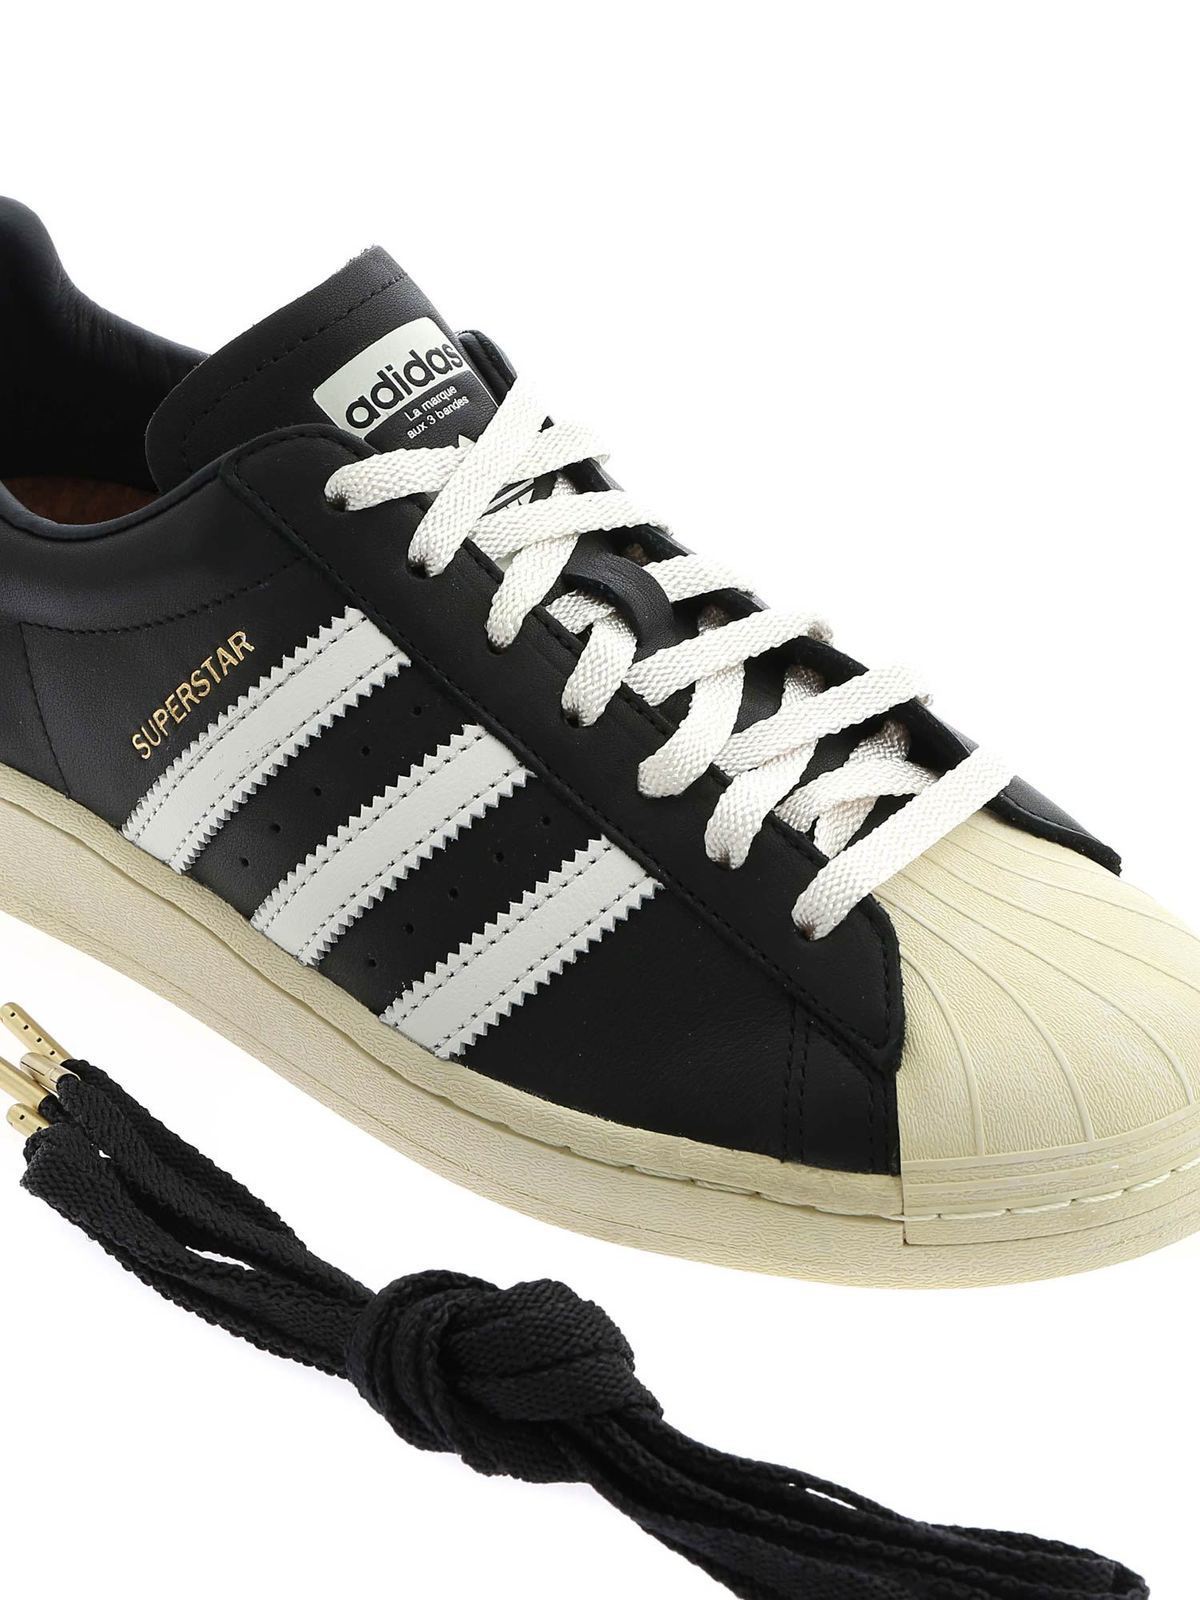 Gimnasia antepasado cascada Trainers Adidas Originals - Superstar sneakers in black and white - FV2832